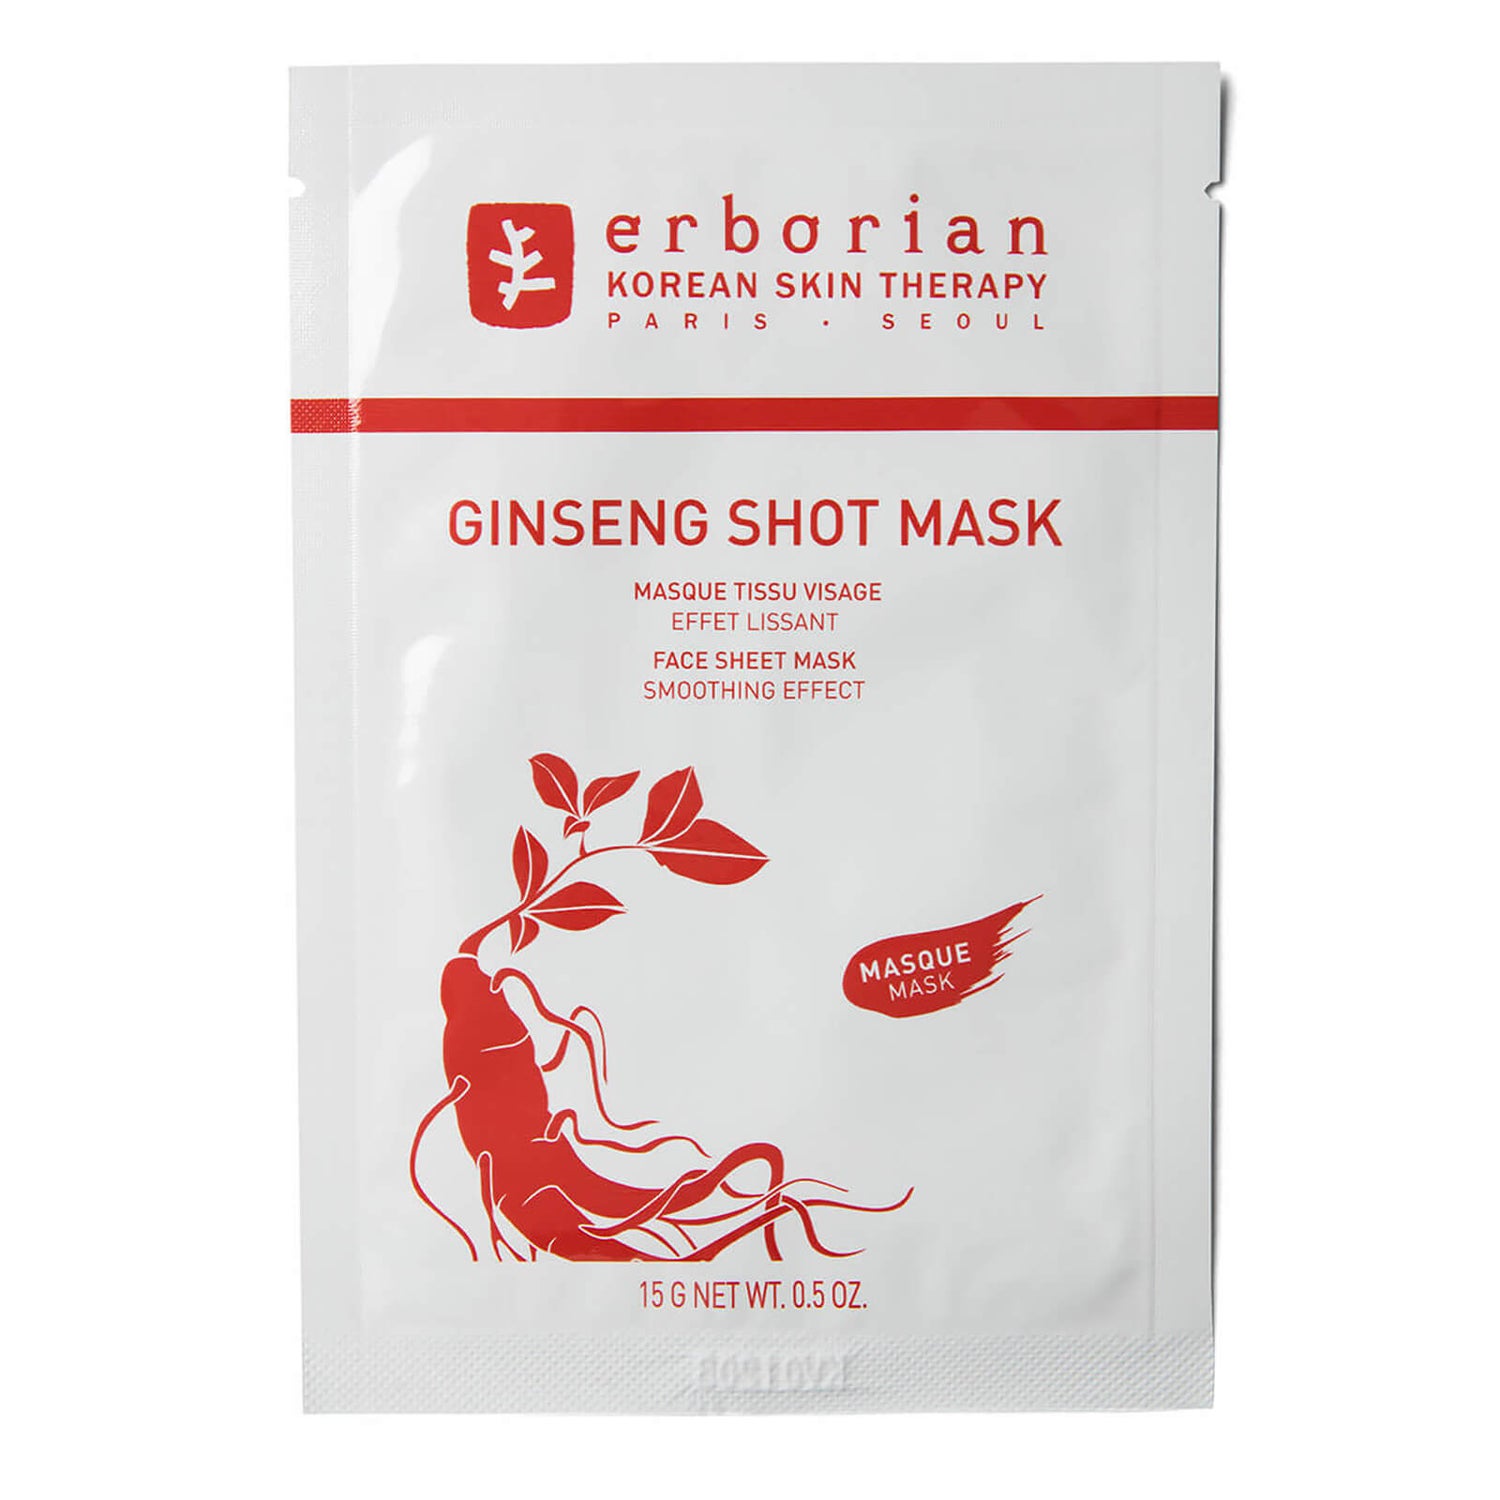 Ginseng Shot Mask - Mashera viso